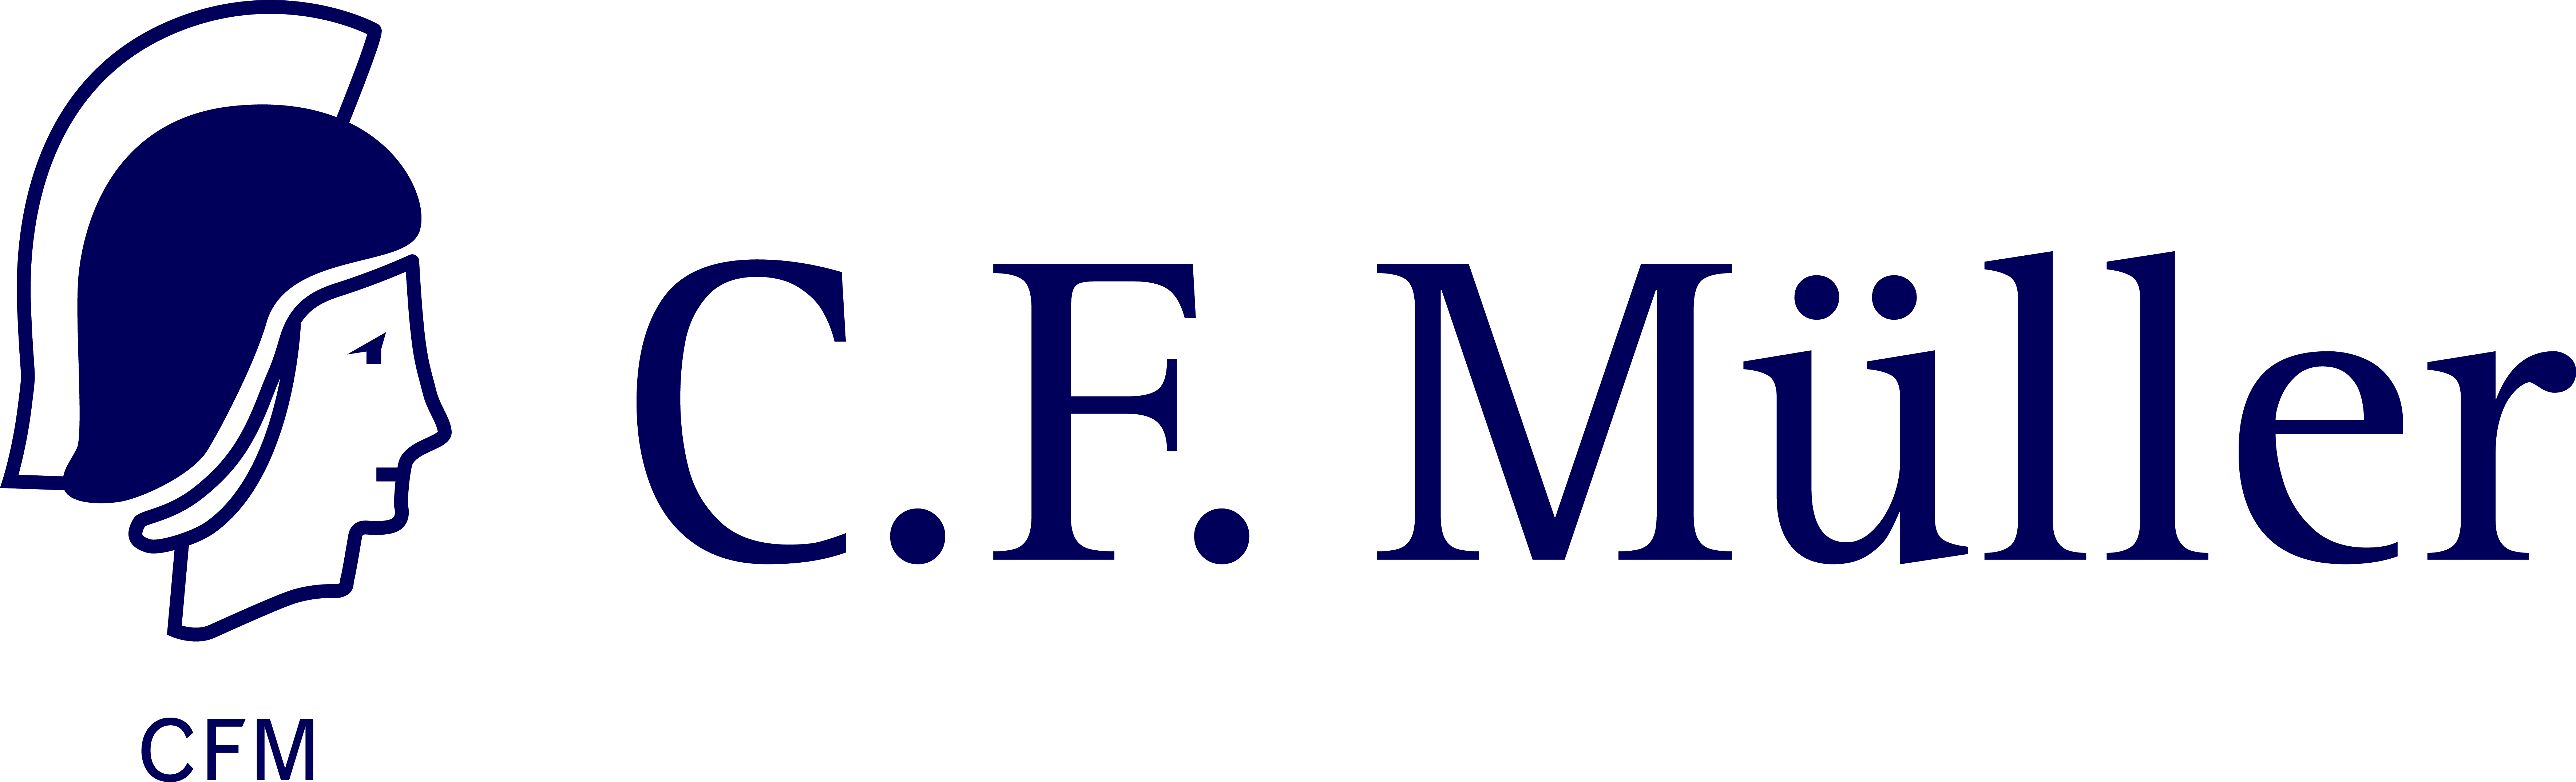 CFMueller-Logo-2009-blau